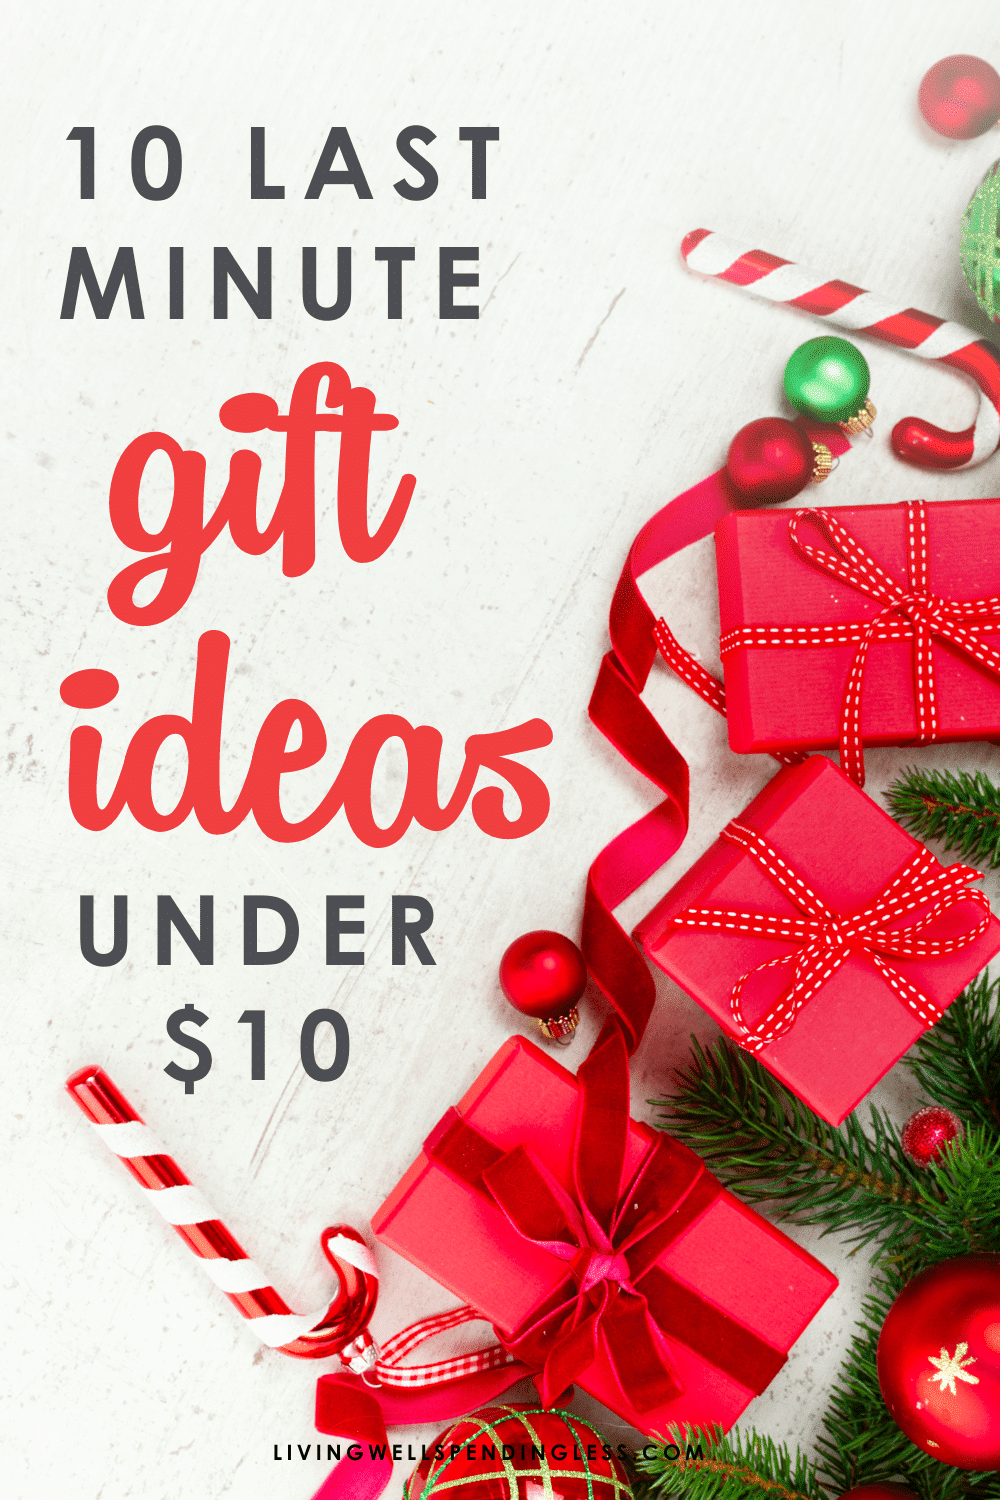 Ten Last Minute Gift Ideas Under $10